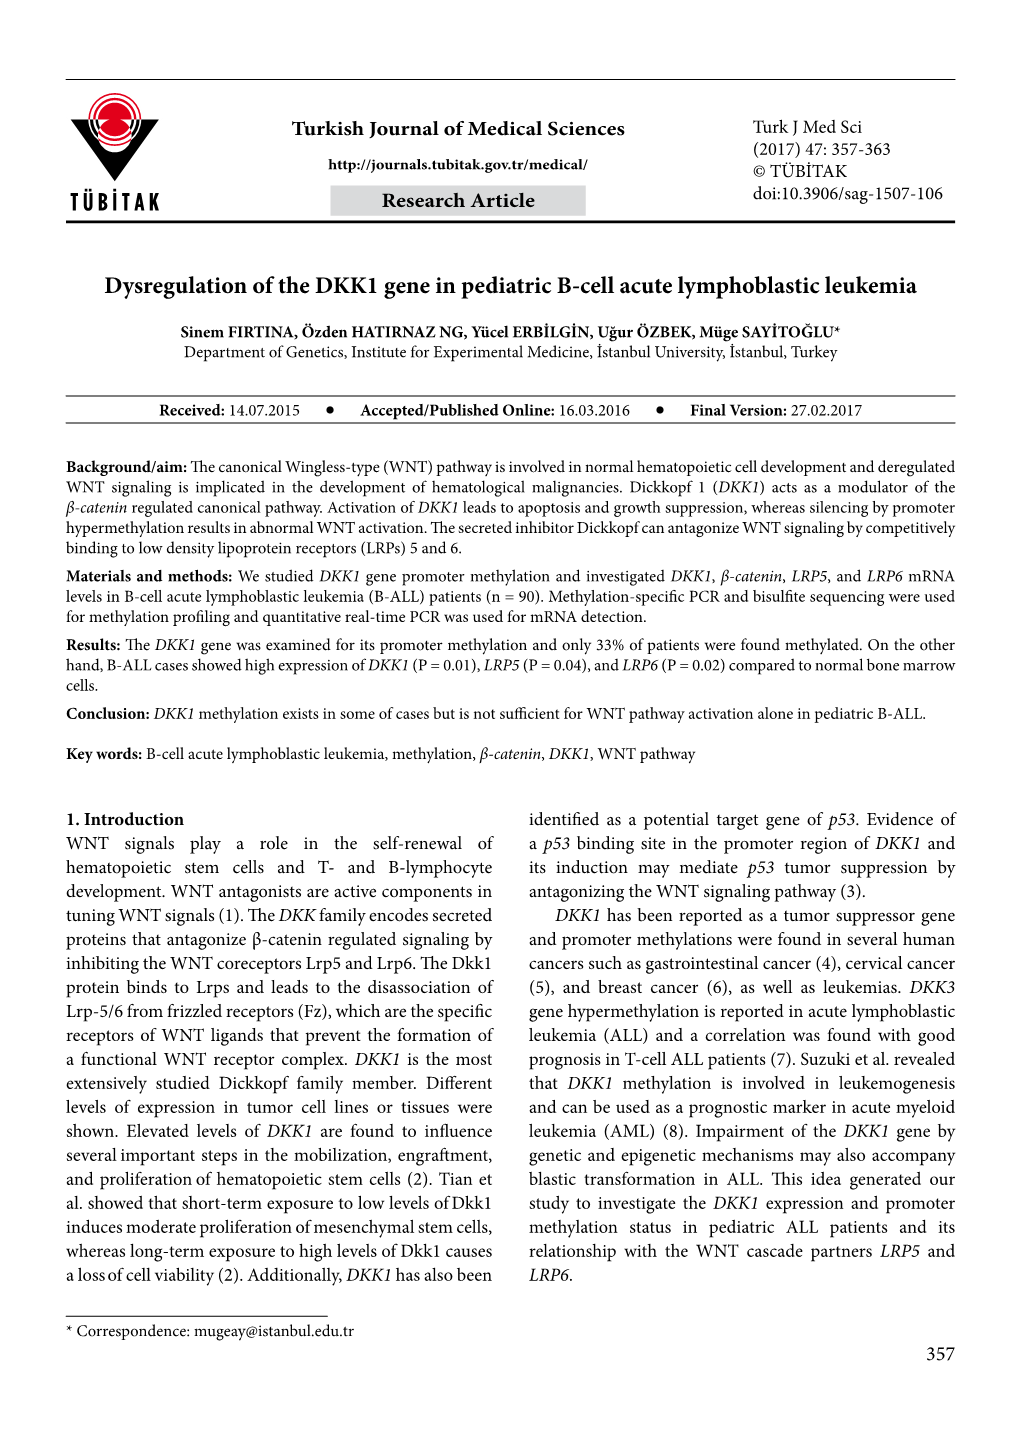 Dysregulation of the DKK1 Gene in Pediatric B-Cell Acute Lymphoblastic Leukemia